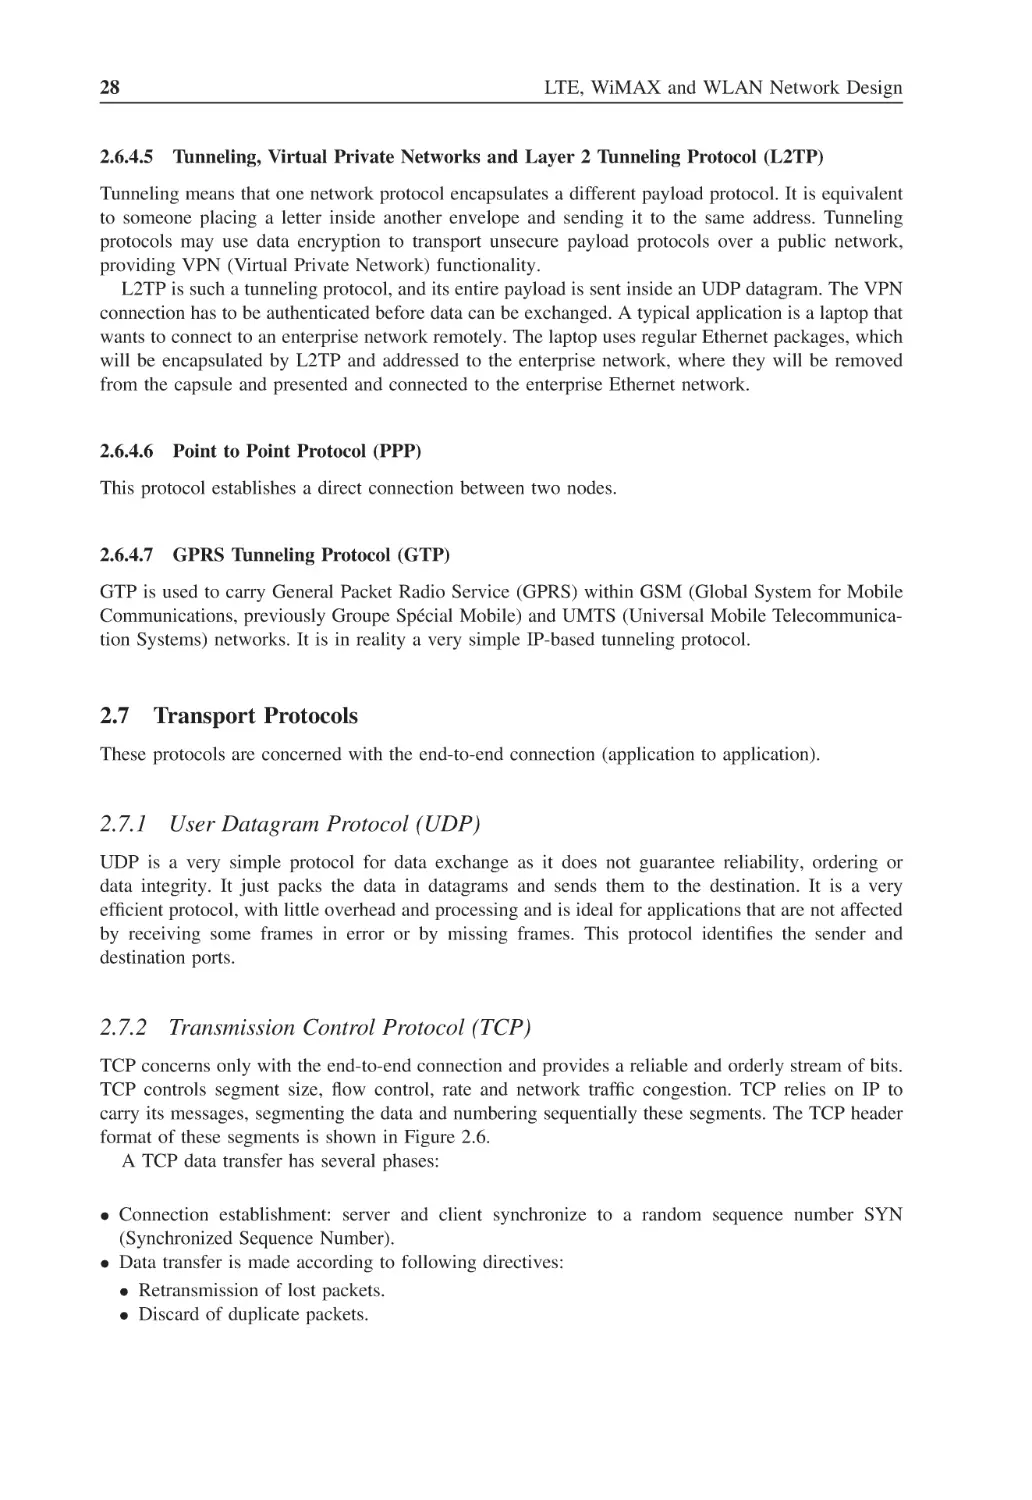 2.7 Transport Protocols
2.7.1 User Datagram Protocol (UDP)
2.7.2 Transmission Control Protocol (TCP)